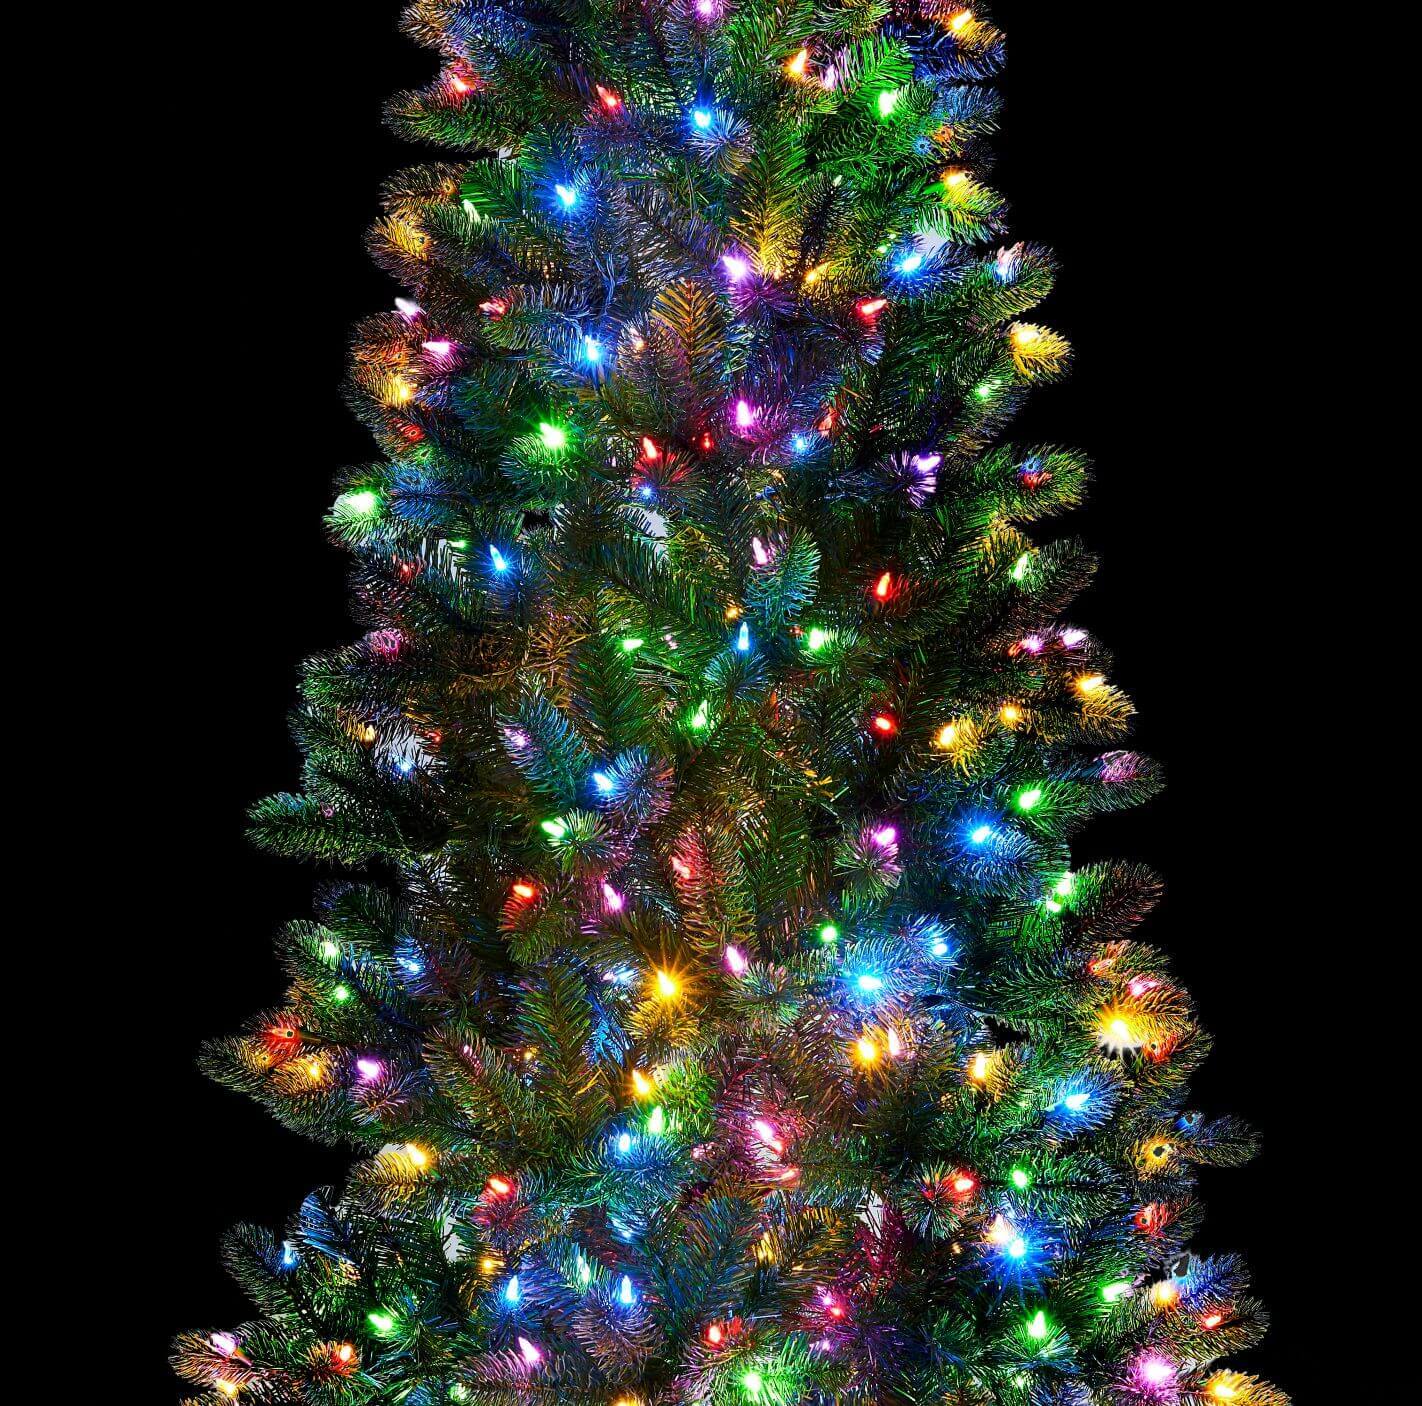 King of Christmas 7.5 King Douglas Fir Slim Quick-Shape Artificial Christmas Tree with 650 Warm White & Multi-Color LED Lights